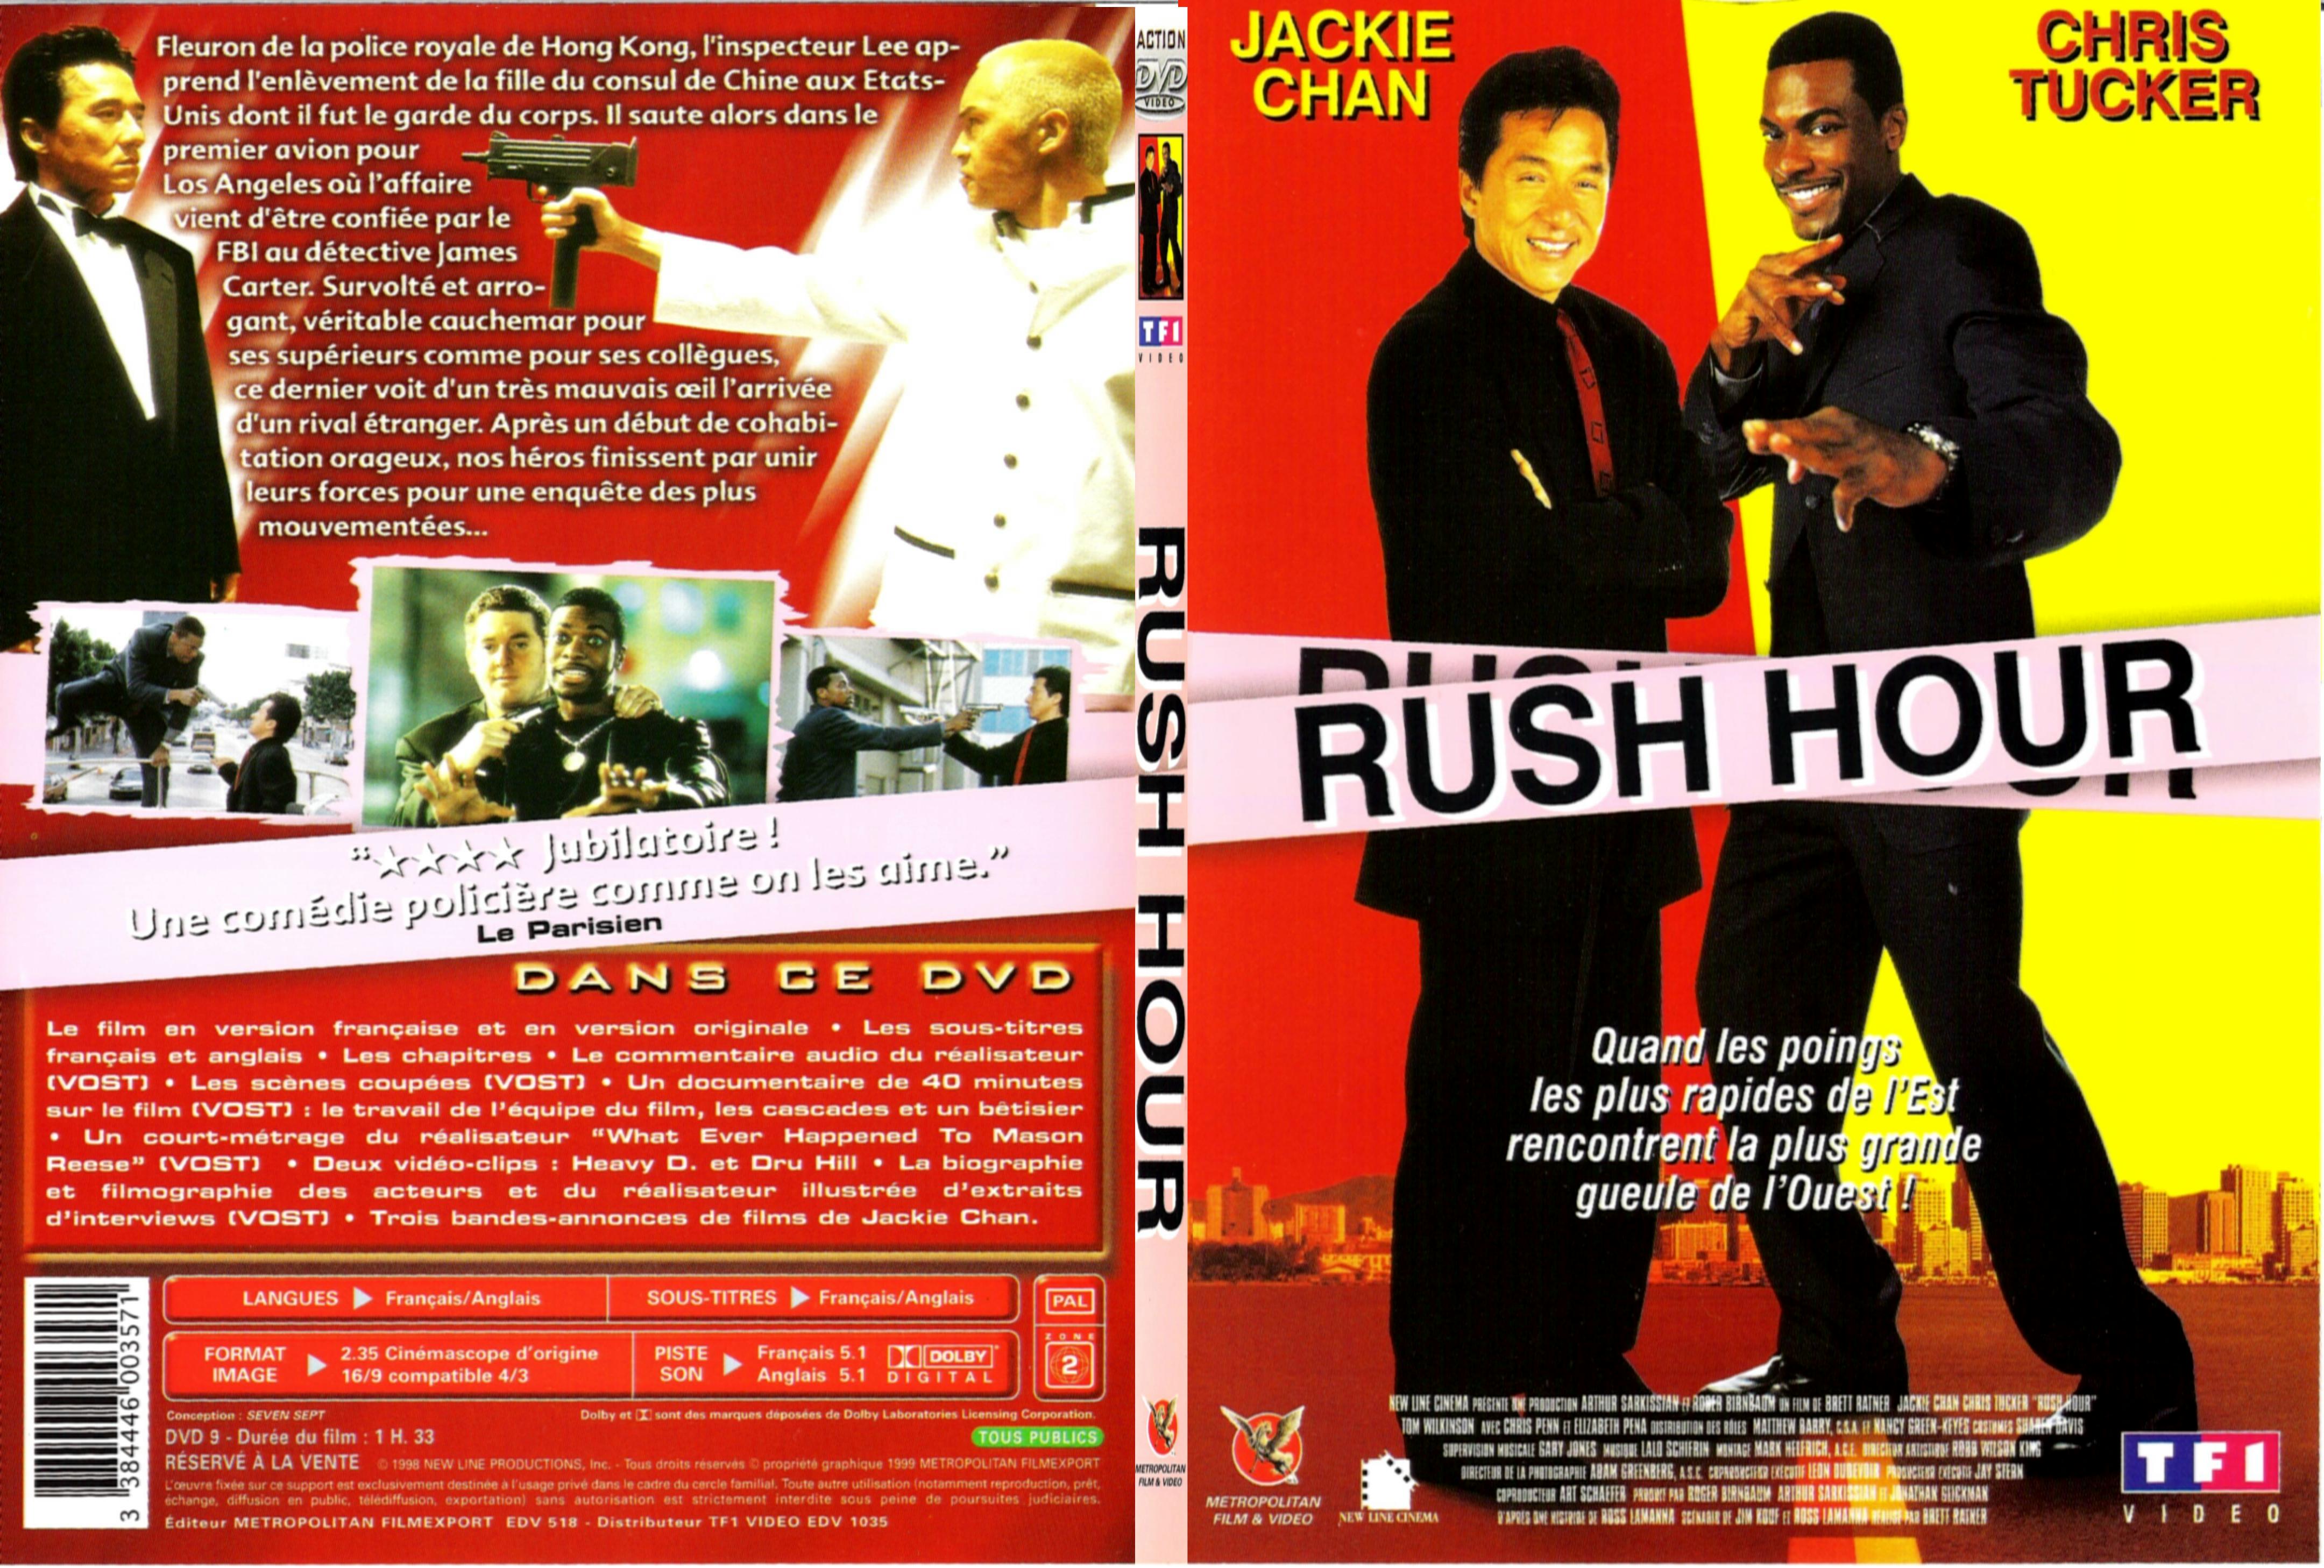 Jaquette DVD Rush hour - SLIM